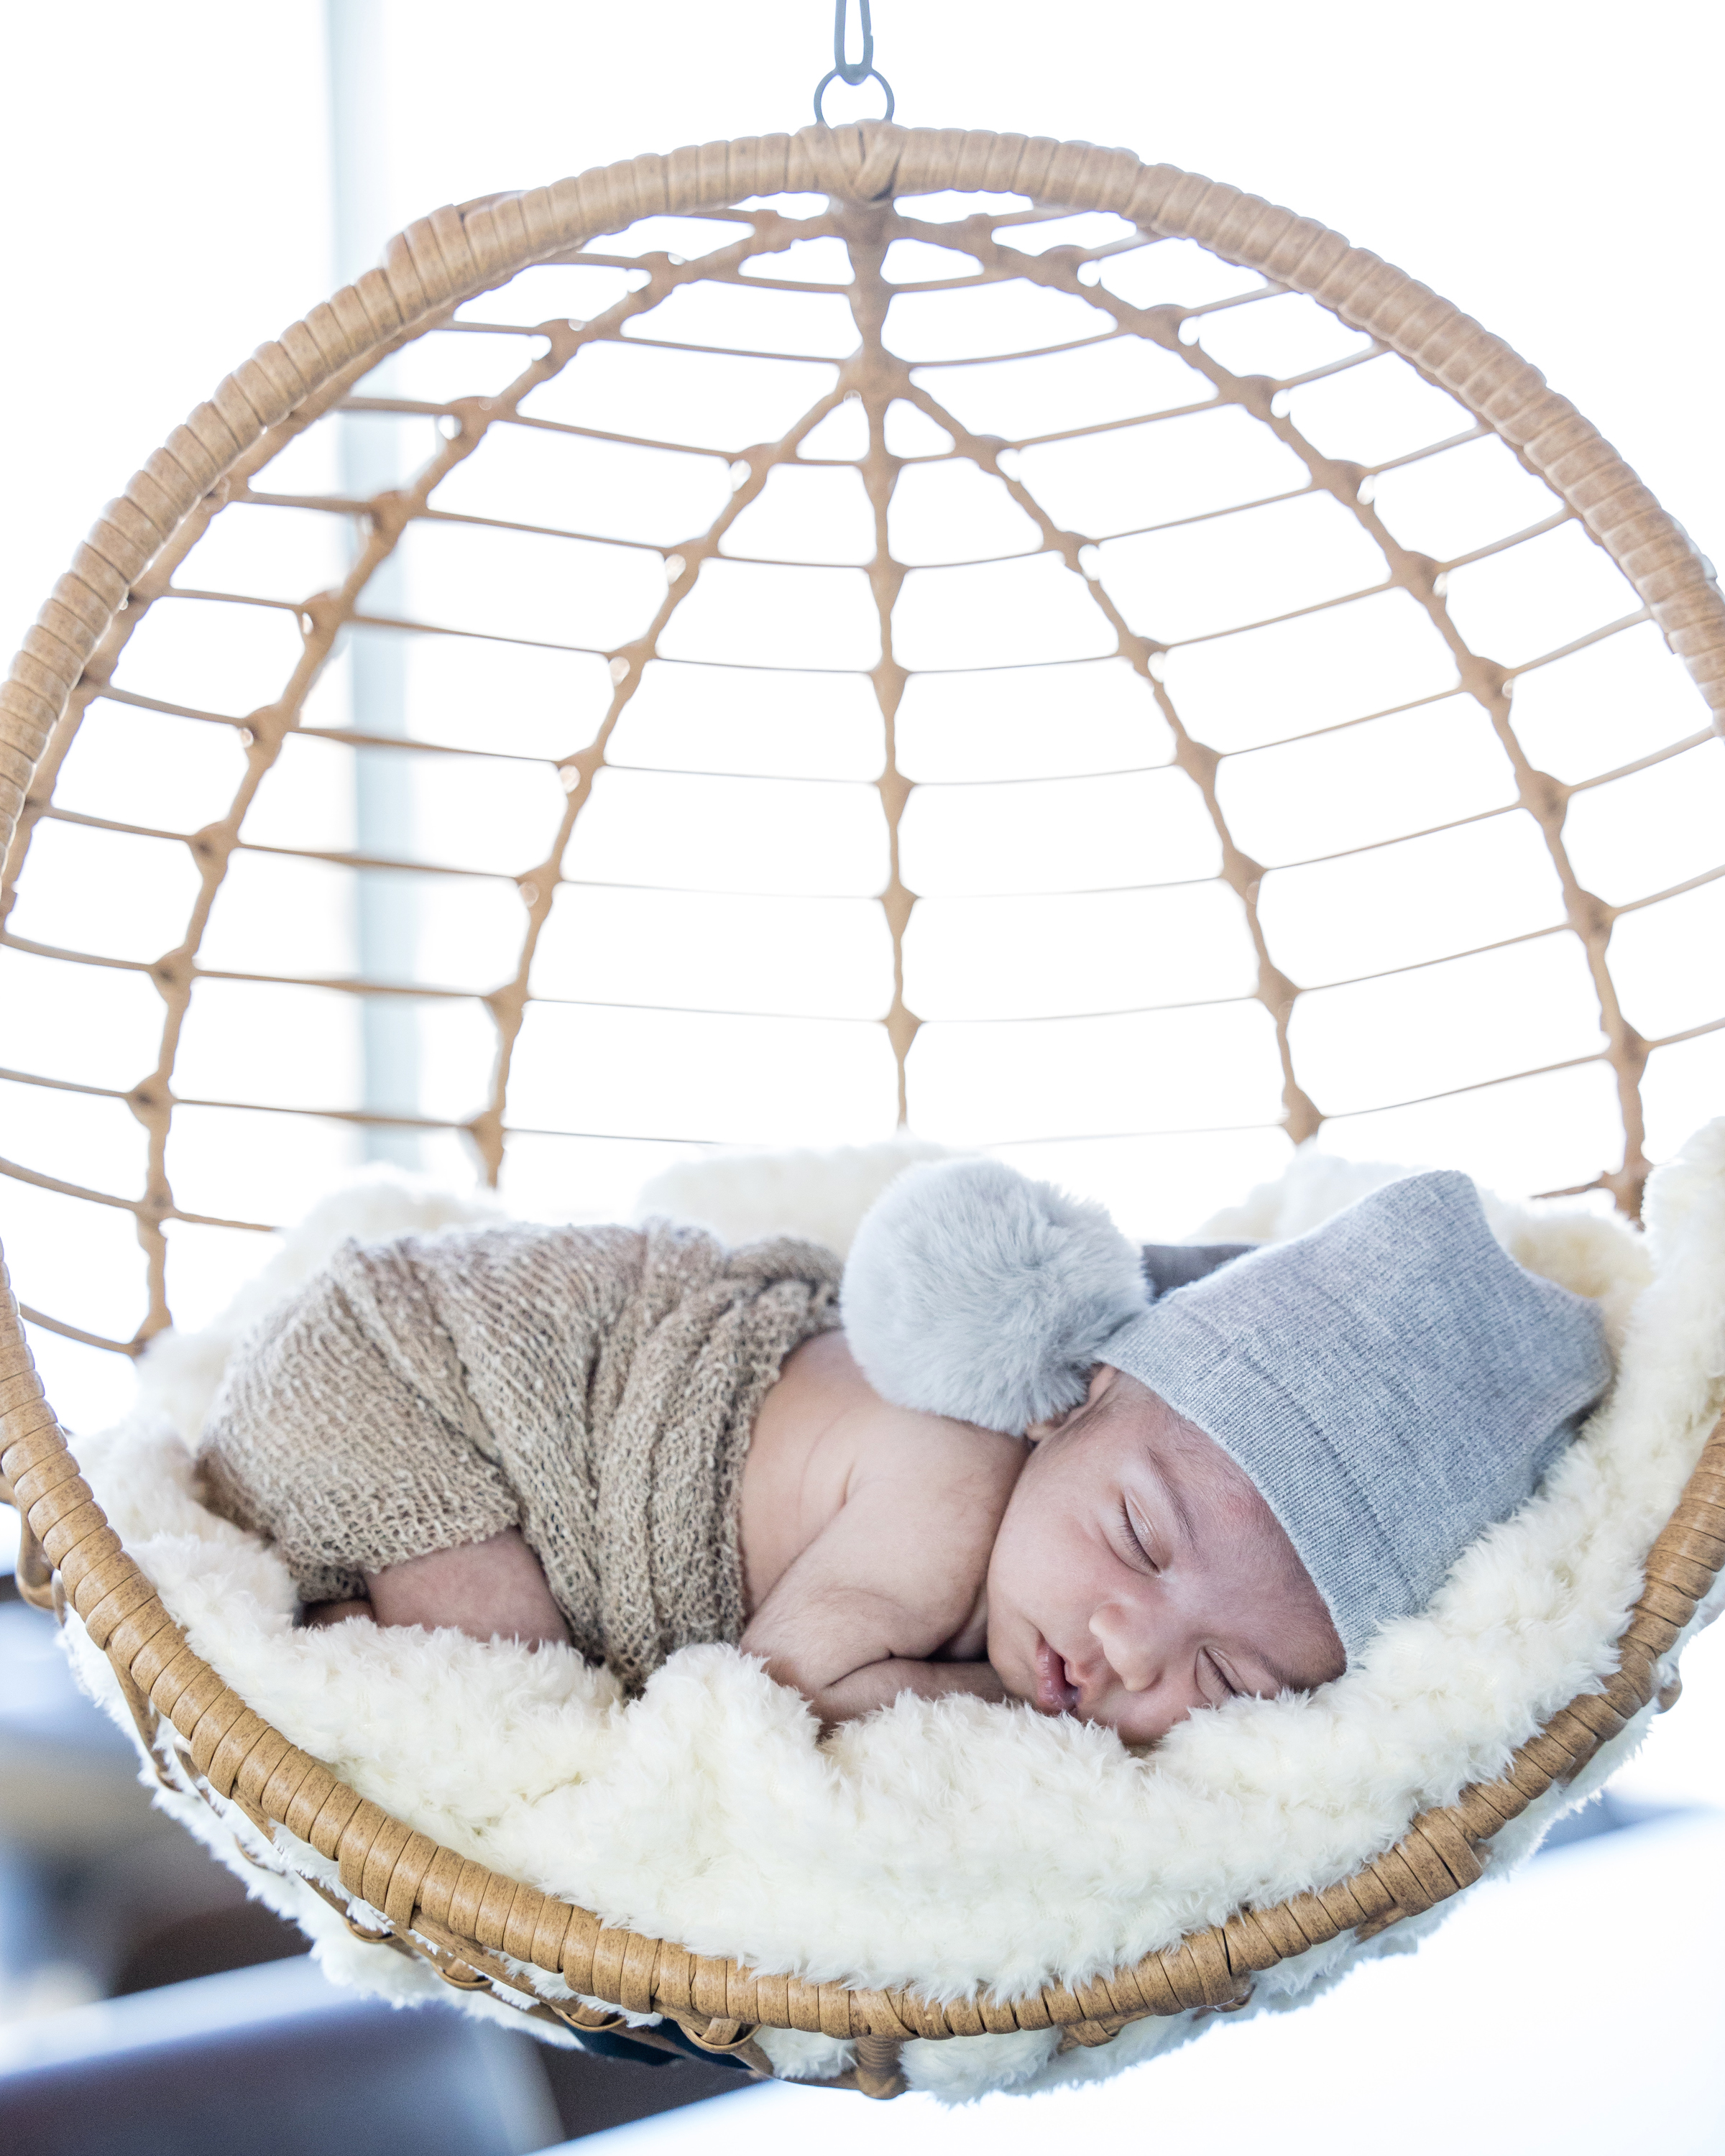 newborn photographer, baby photographer, adorable babies, beautiful babies, baby in a basket